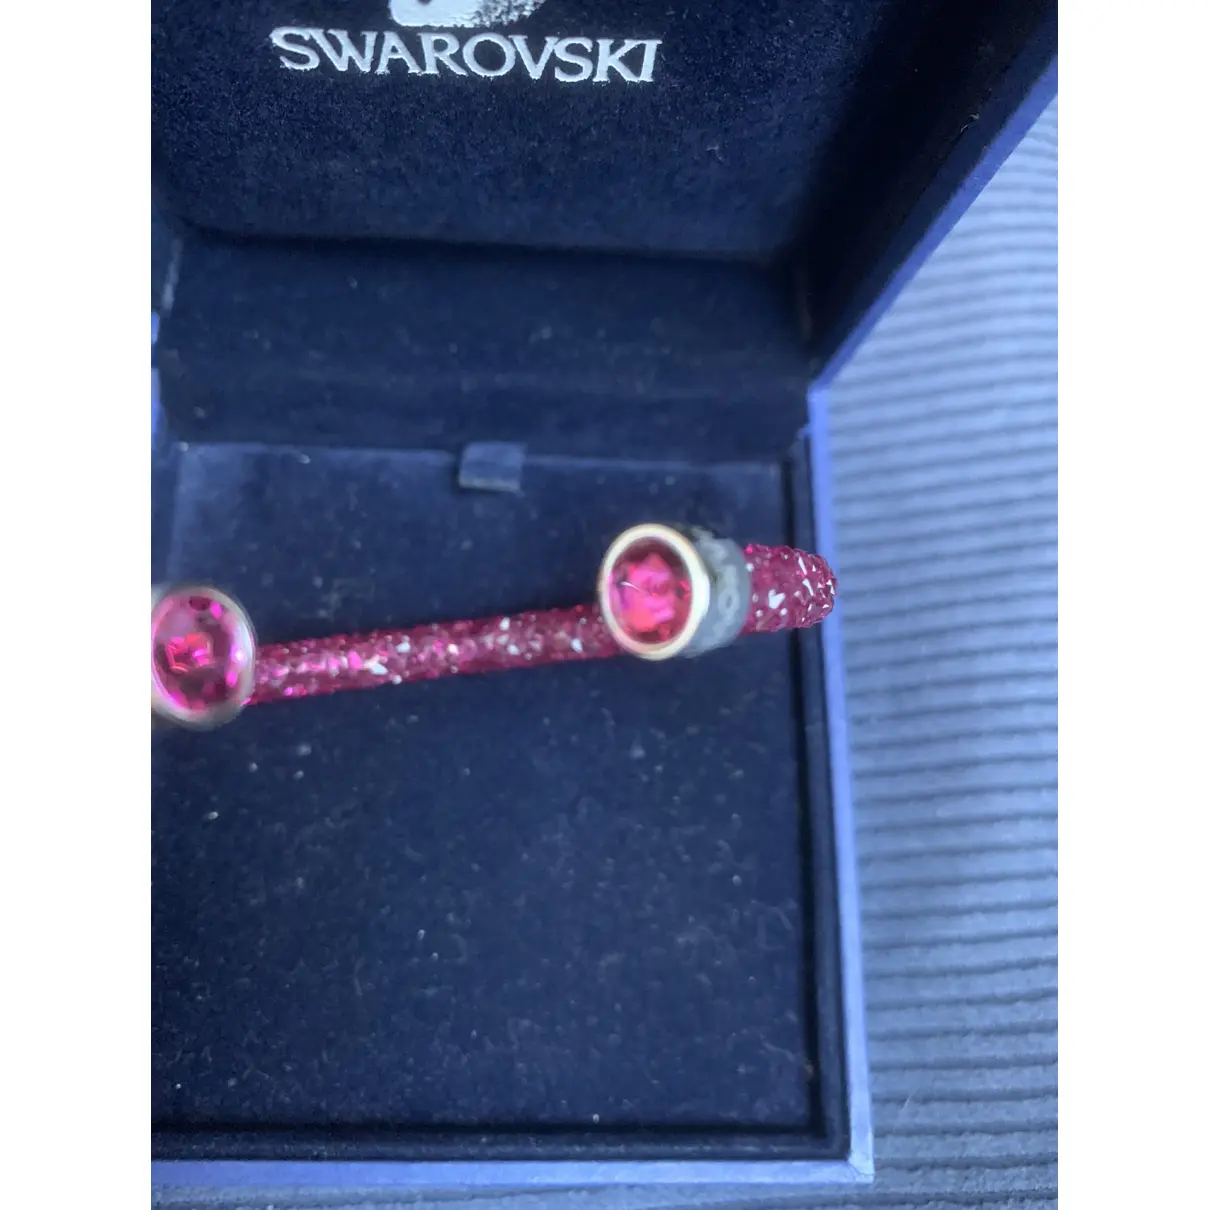 Buy Swarovski Crystal bracelet online